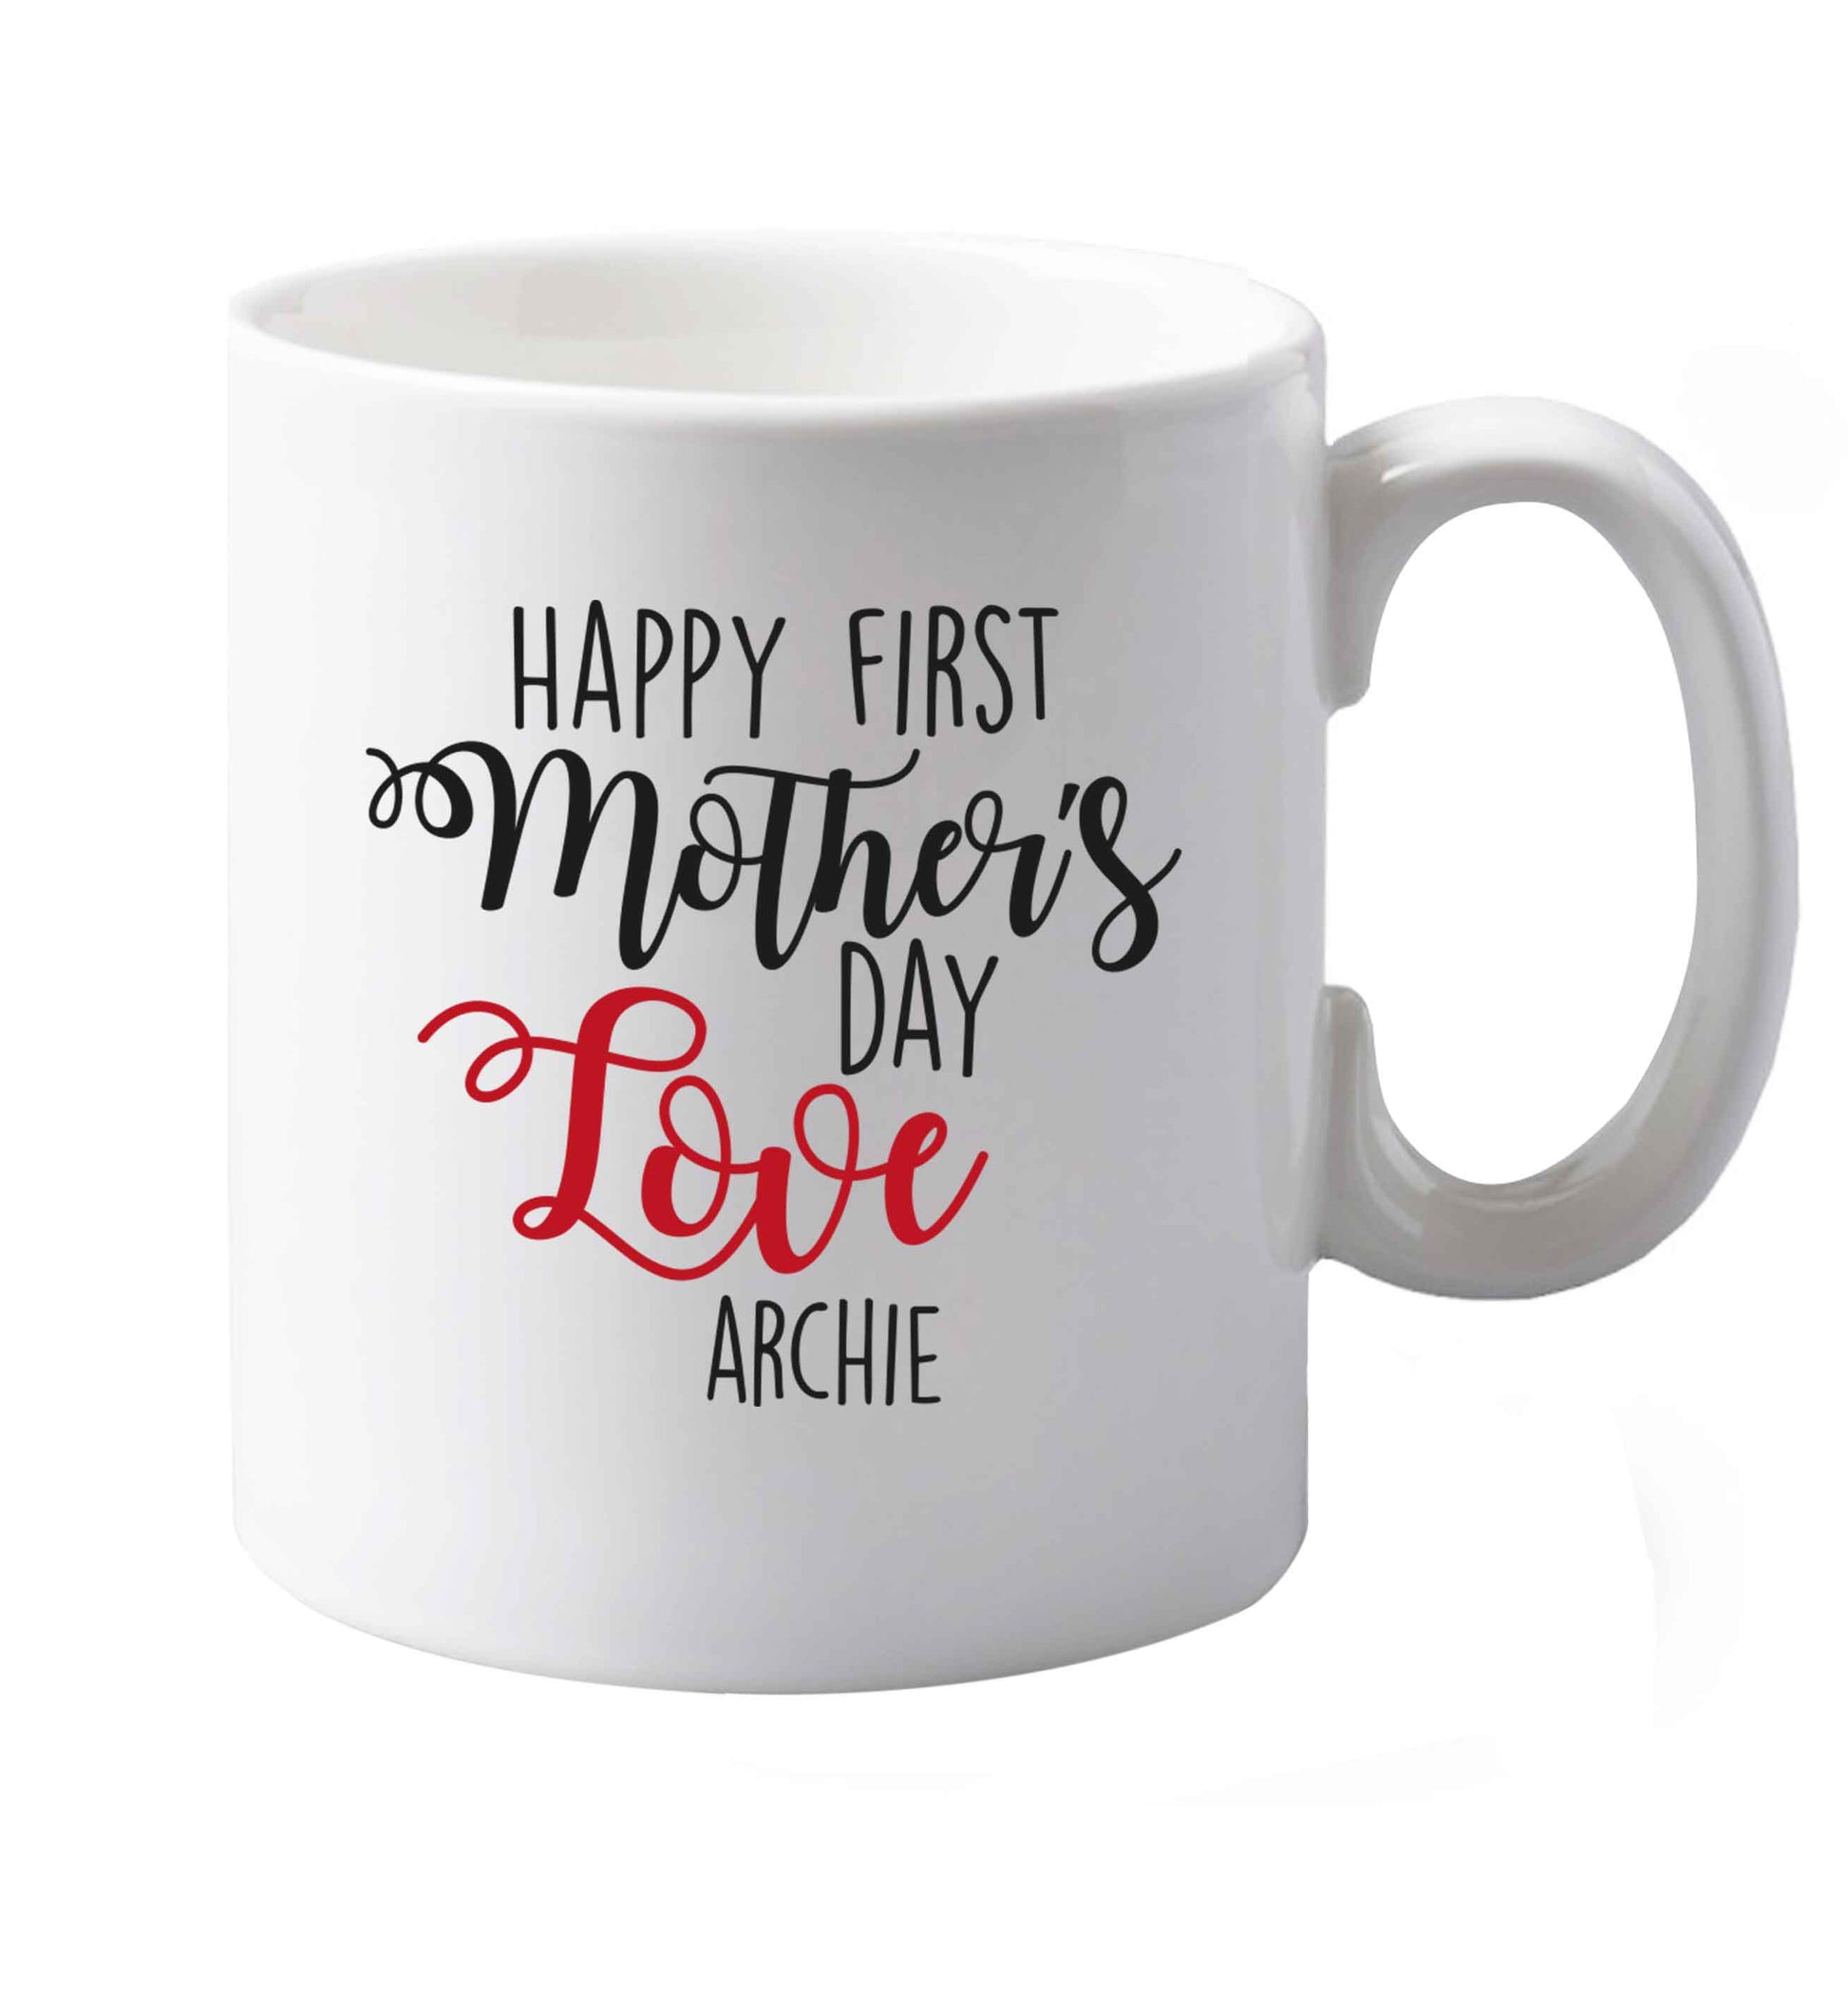 10 oz Mummy's first mother's day! ceramic mug both sides